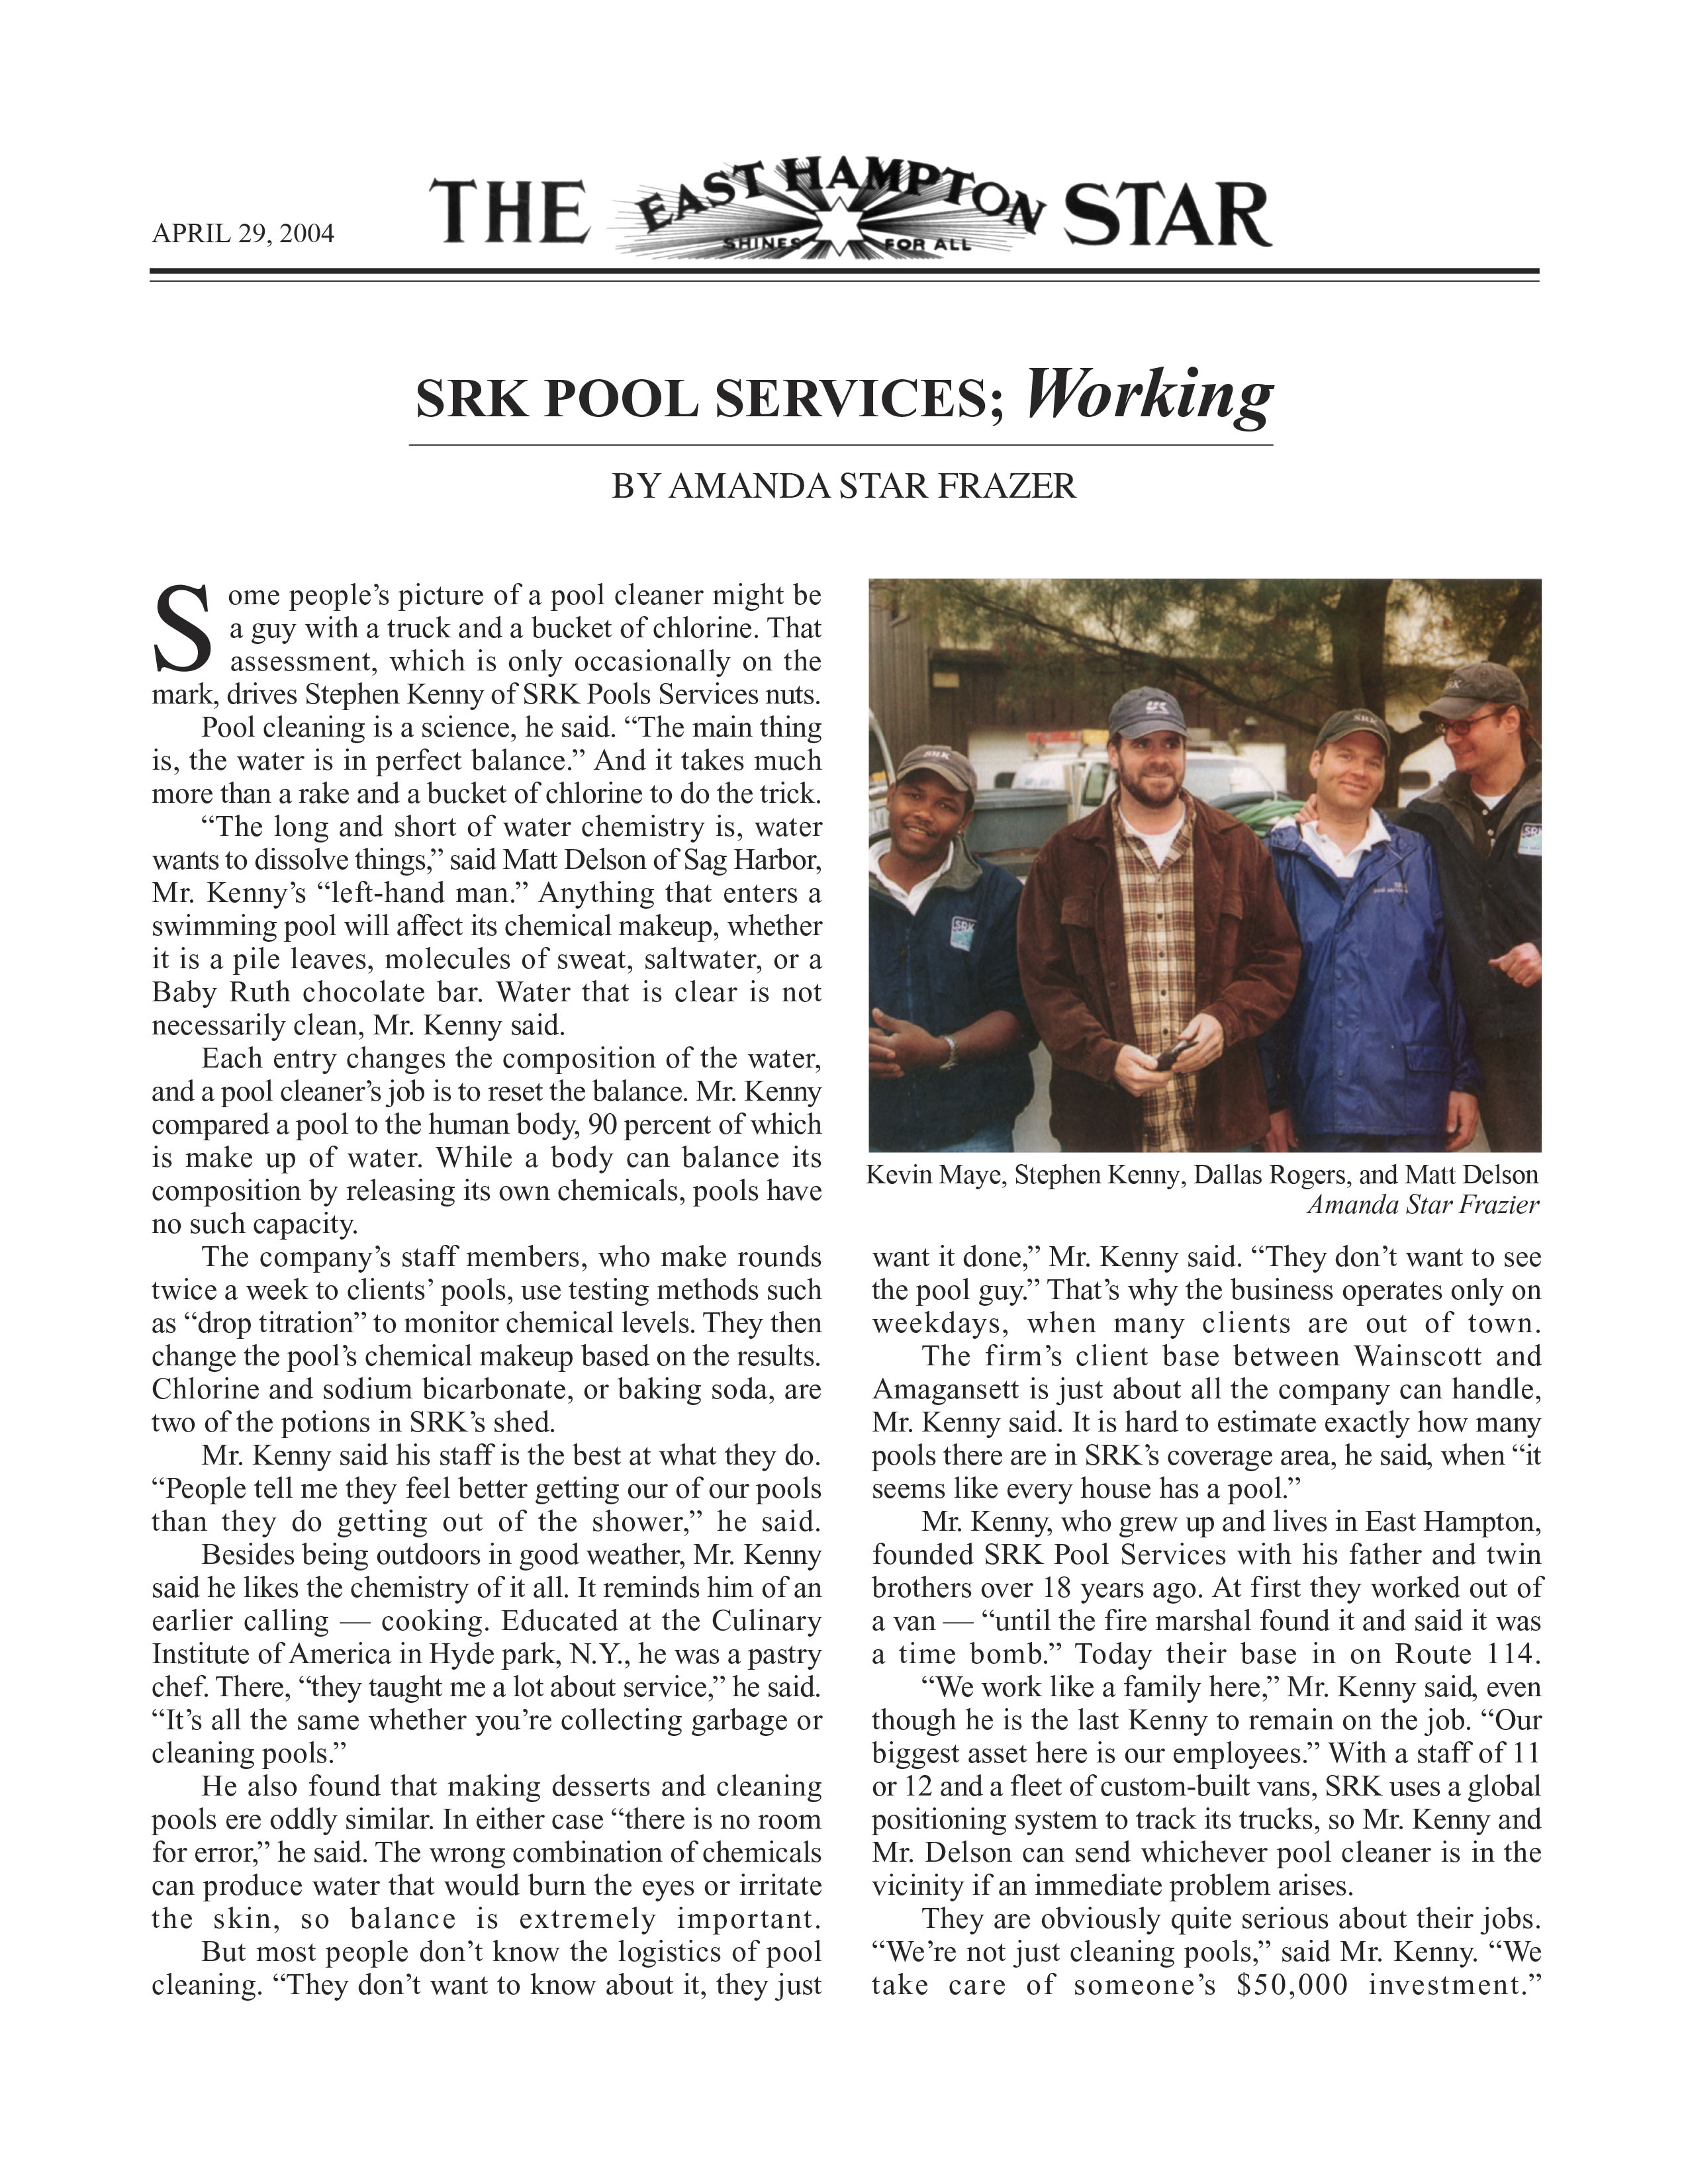 SRK Pool Service Working